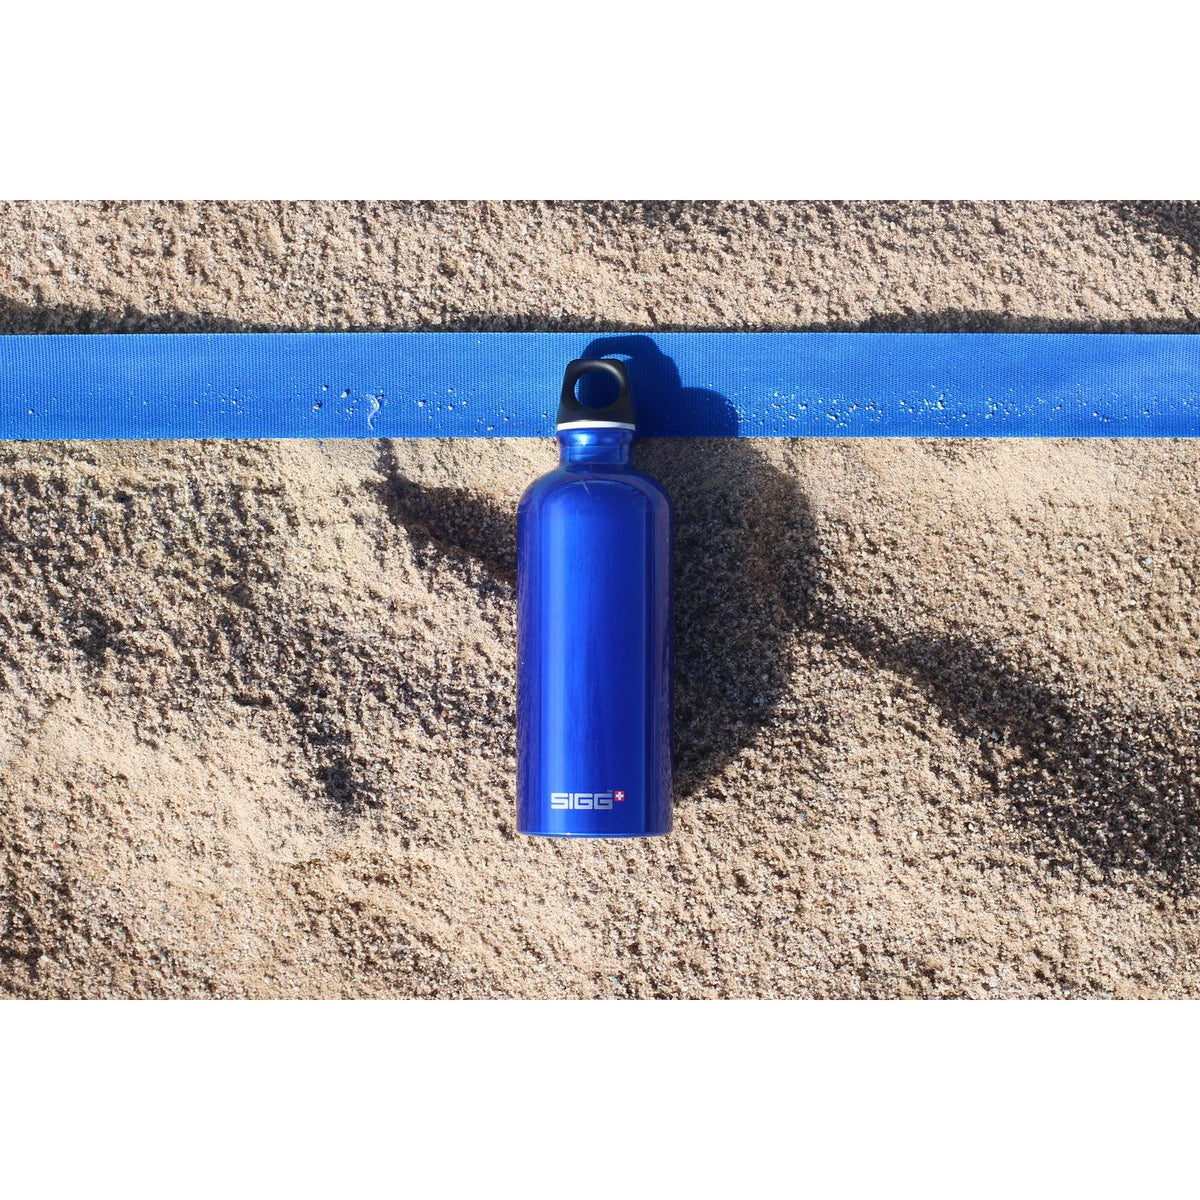 Sigg Traveller 0.6L Water Bottle - Dark Blue